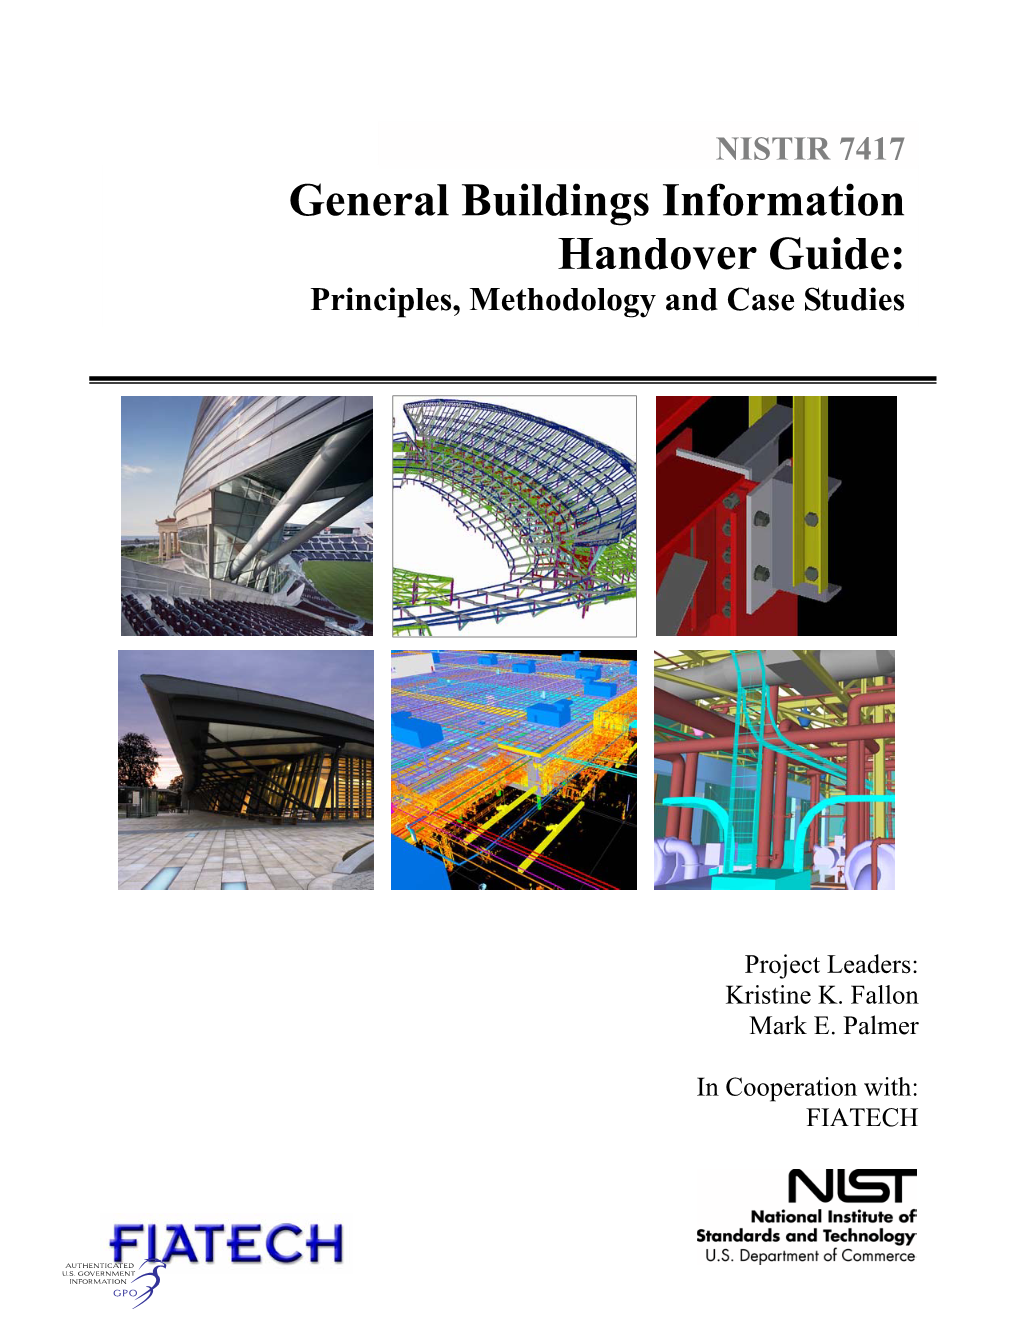 General Buildings Information Handover Guide: Principles, Methodology and Case Studies